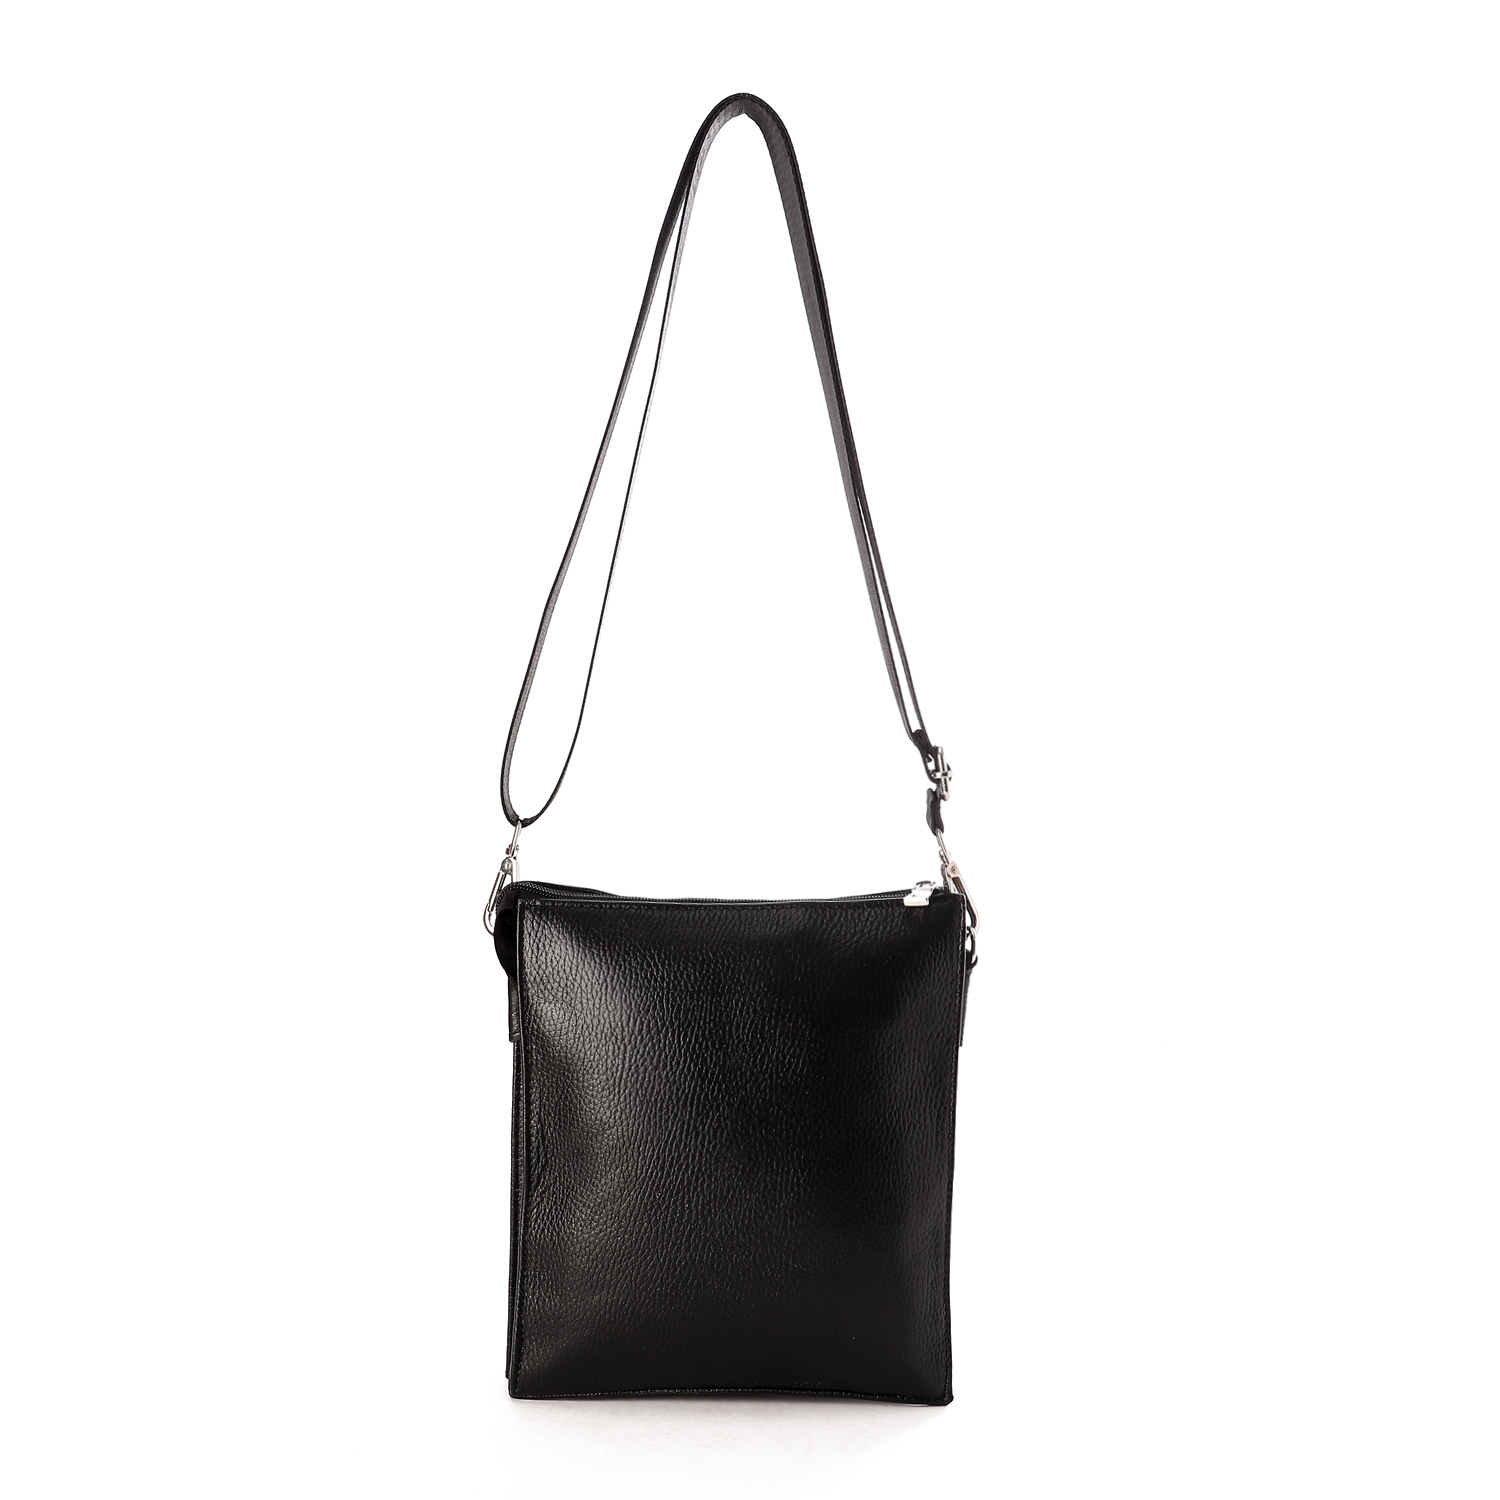 M&O Plain Three Compartments Leather Crossbody Bag For Men - Black